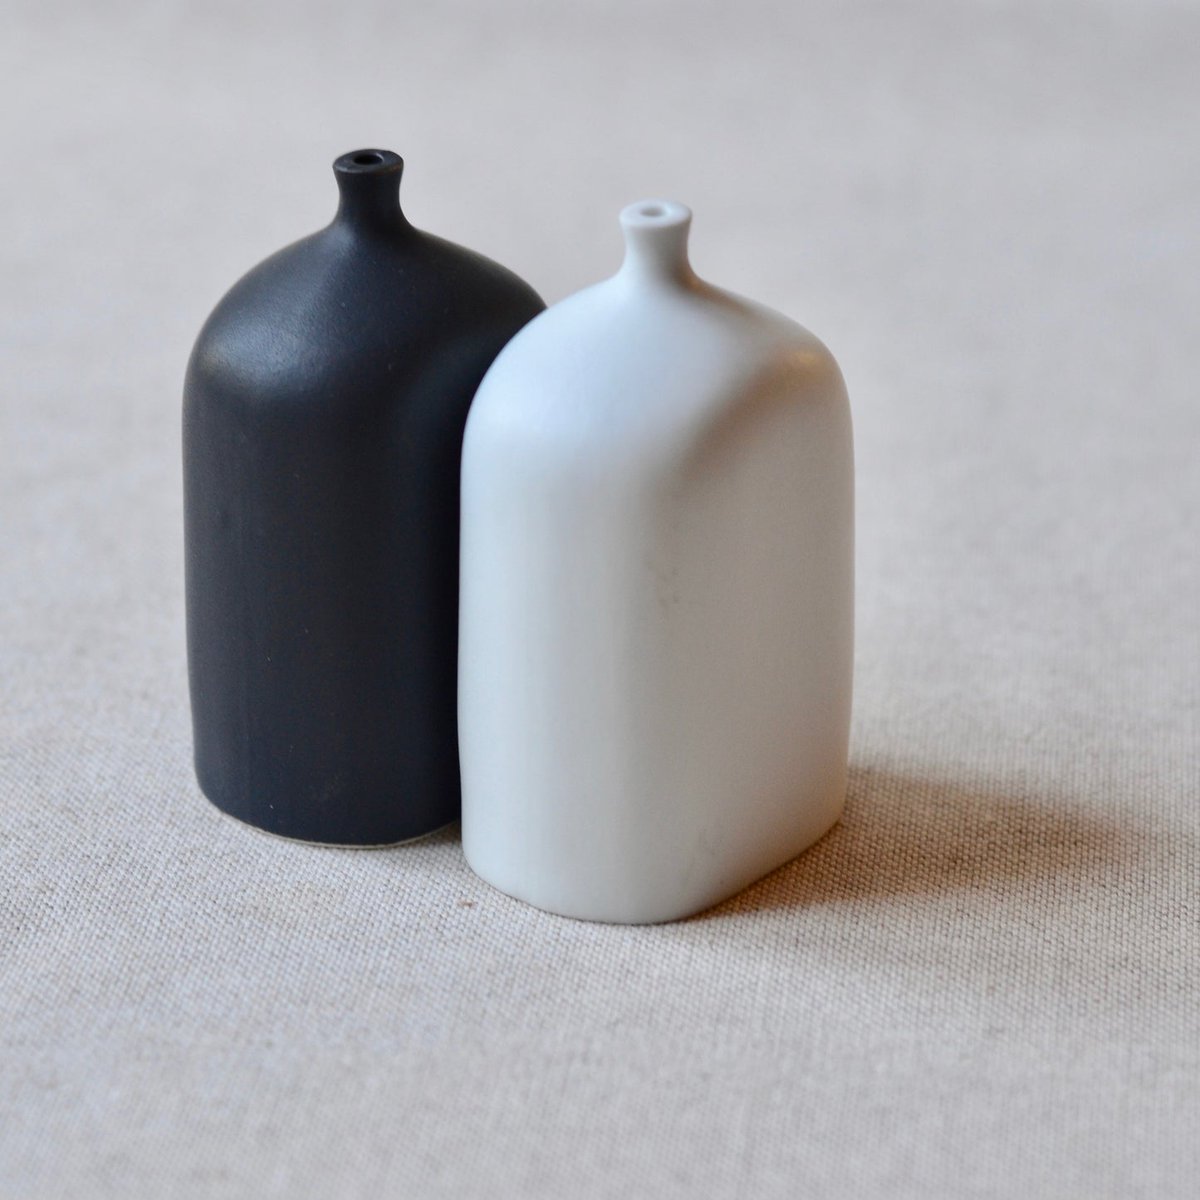 Black and White, Salt and Pepper shaker vials, matte glazed stoneware ceramic.

pilleveroneboutique.com/products/b-w-v…

#stoneware #ceramics #saltshaker #saltandpepper #saltandpeppershakers #peppershaker #tableware